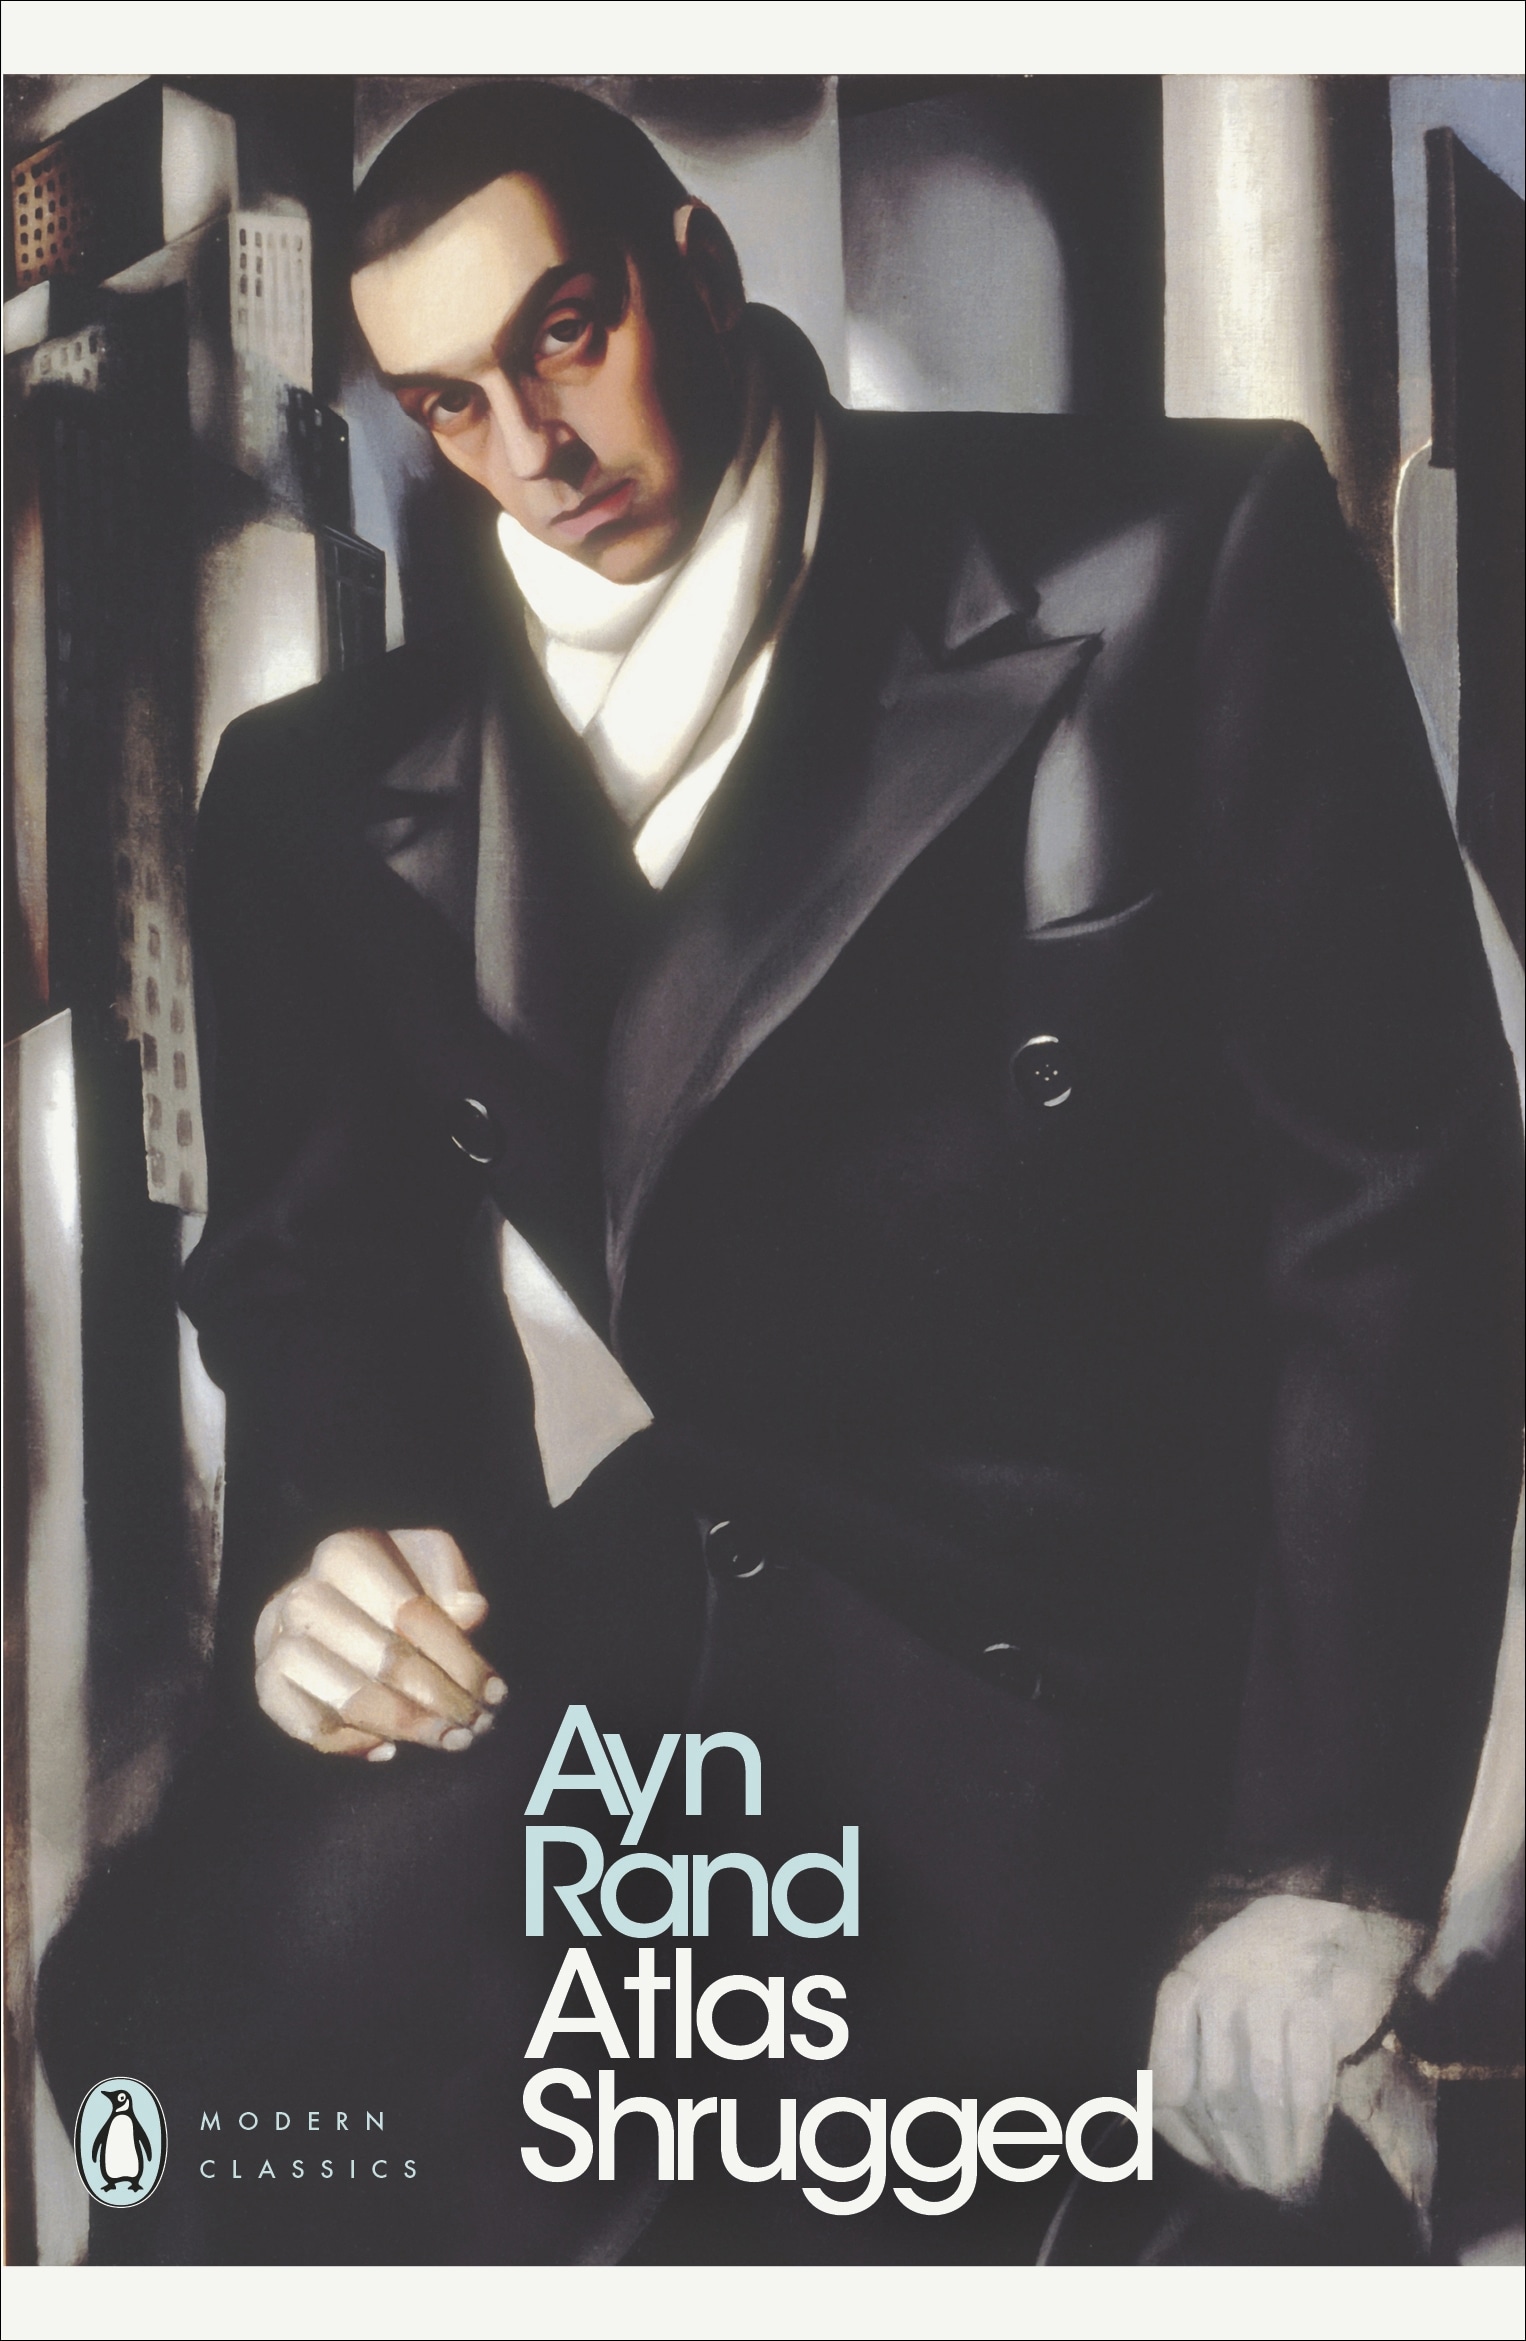 Book “Atlas Shrugged” by Ayn Rand — February 1, 2007